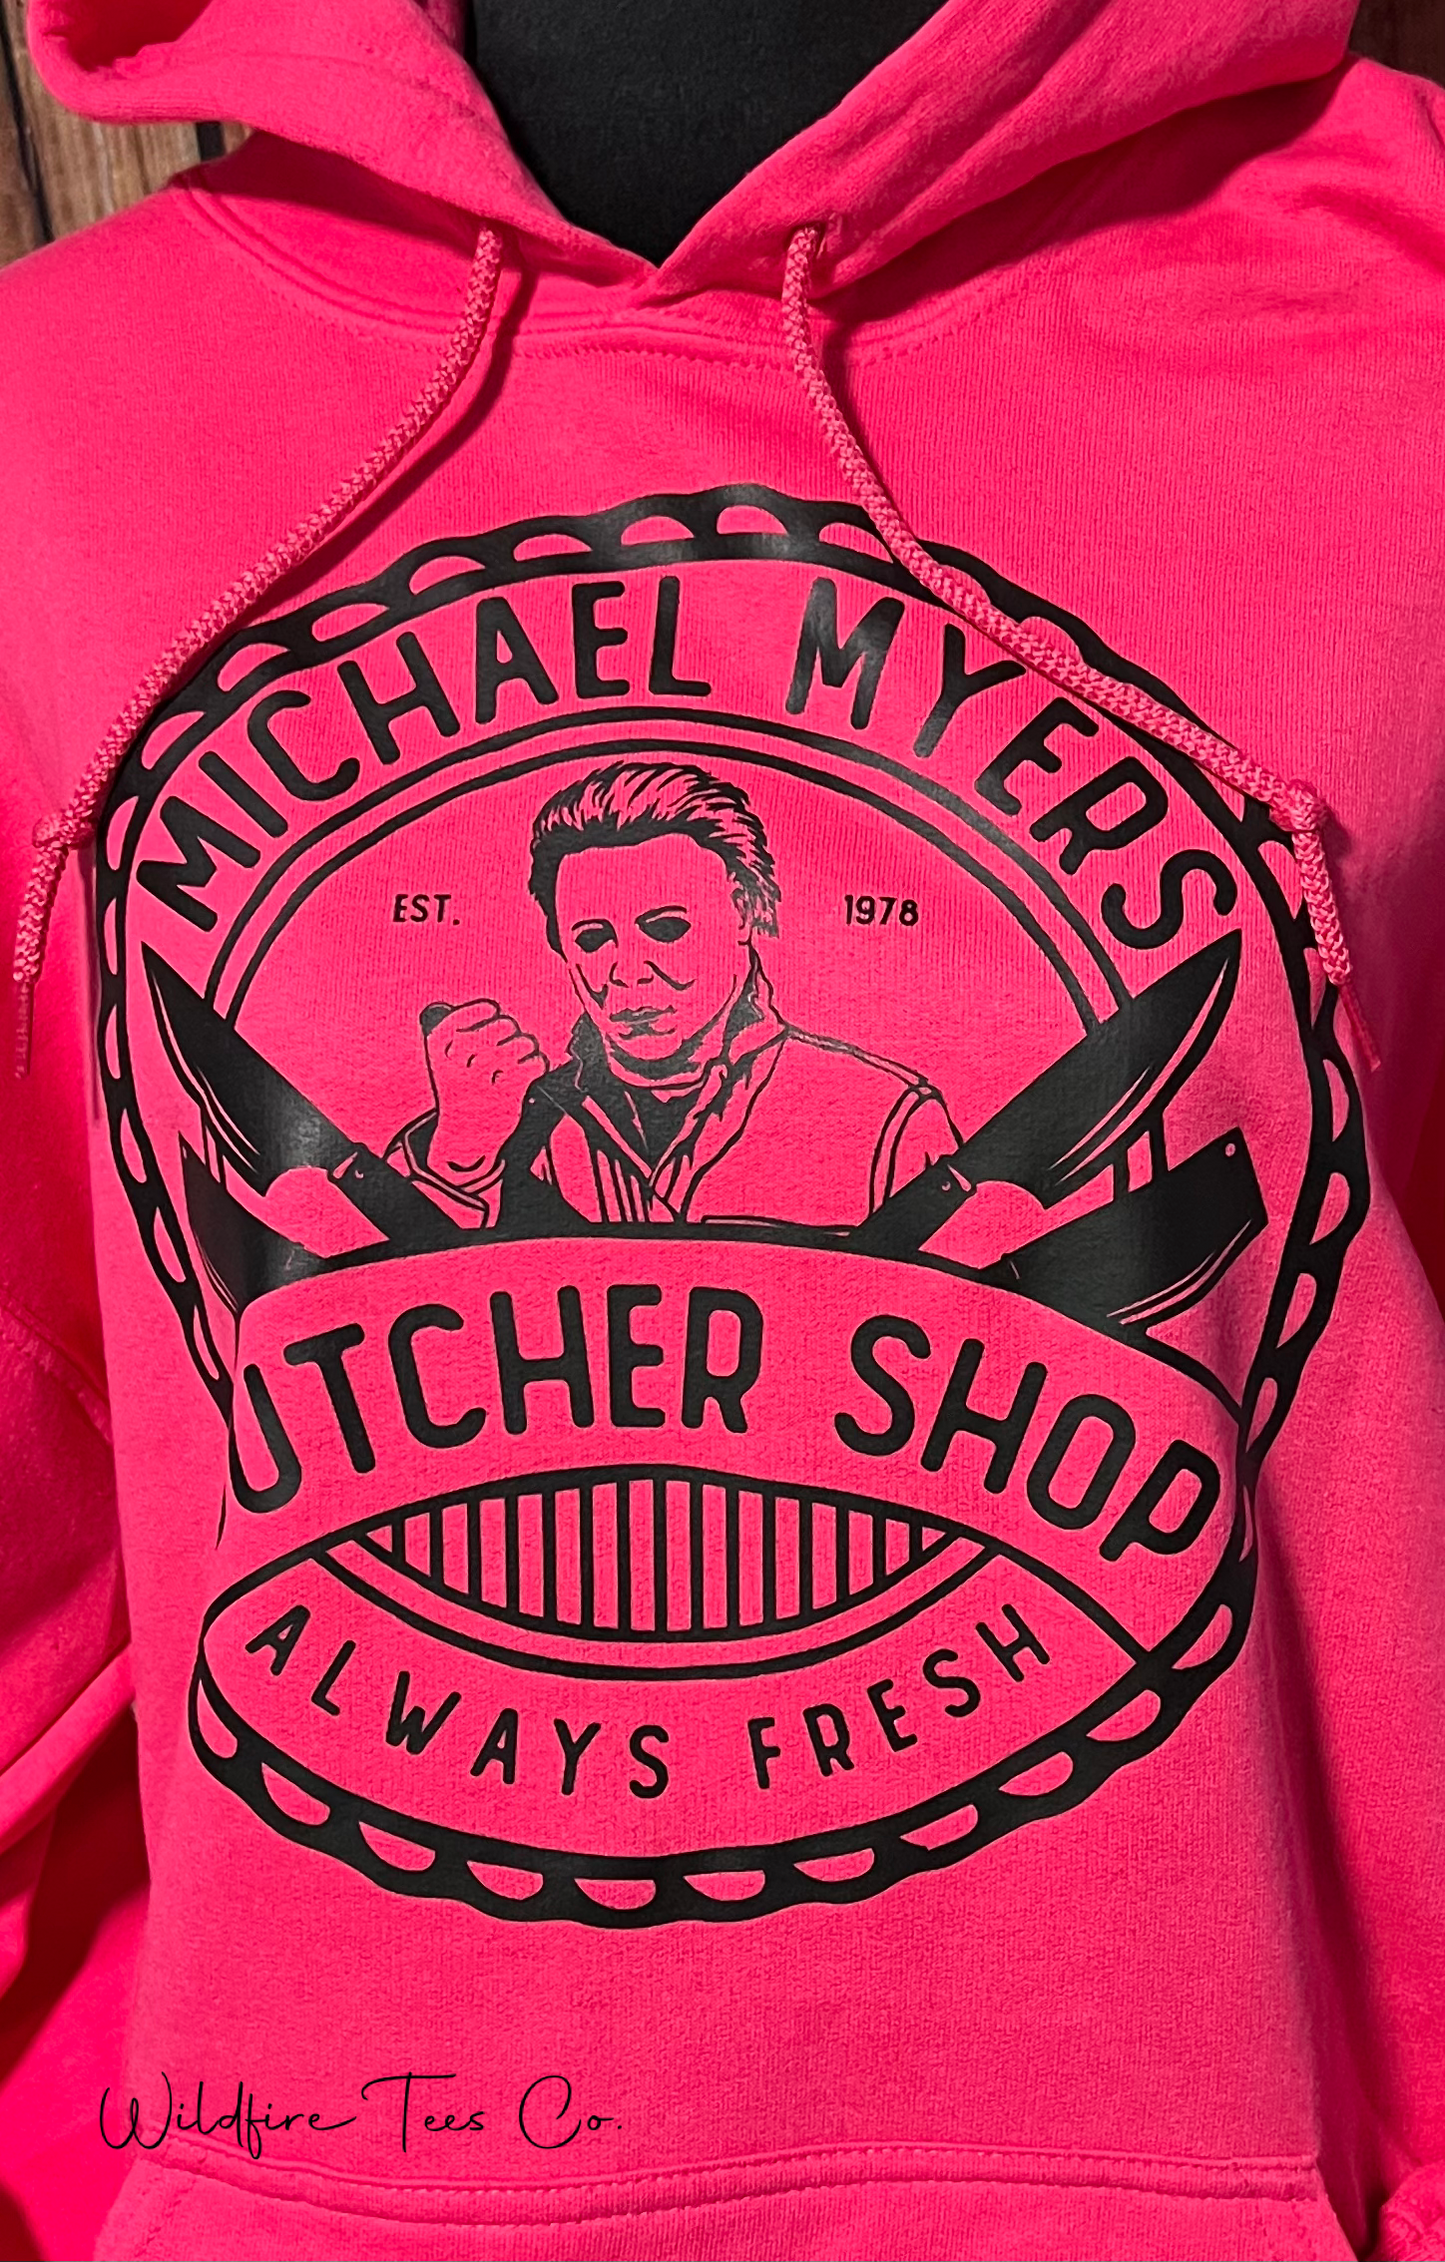 Butcher Shop Sweatshirt